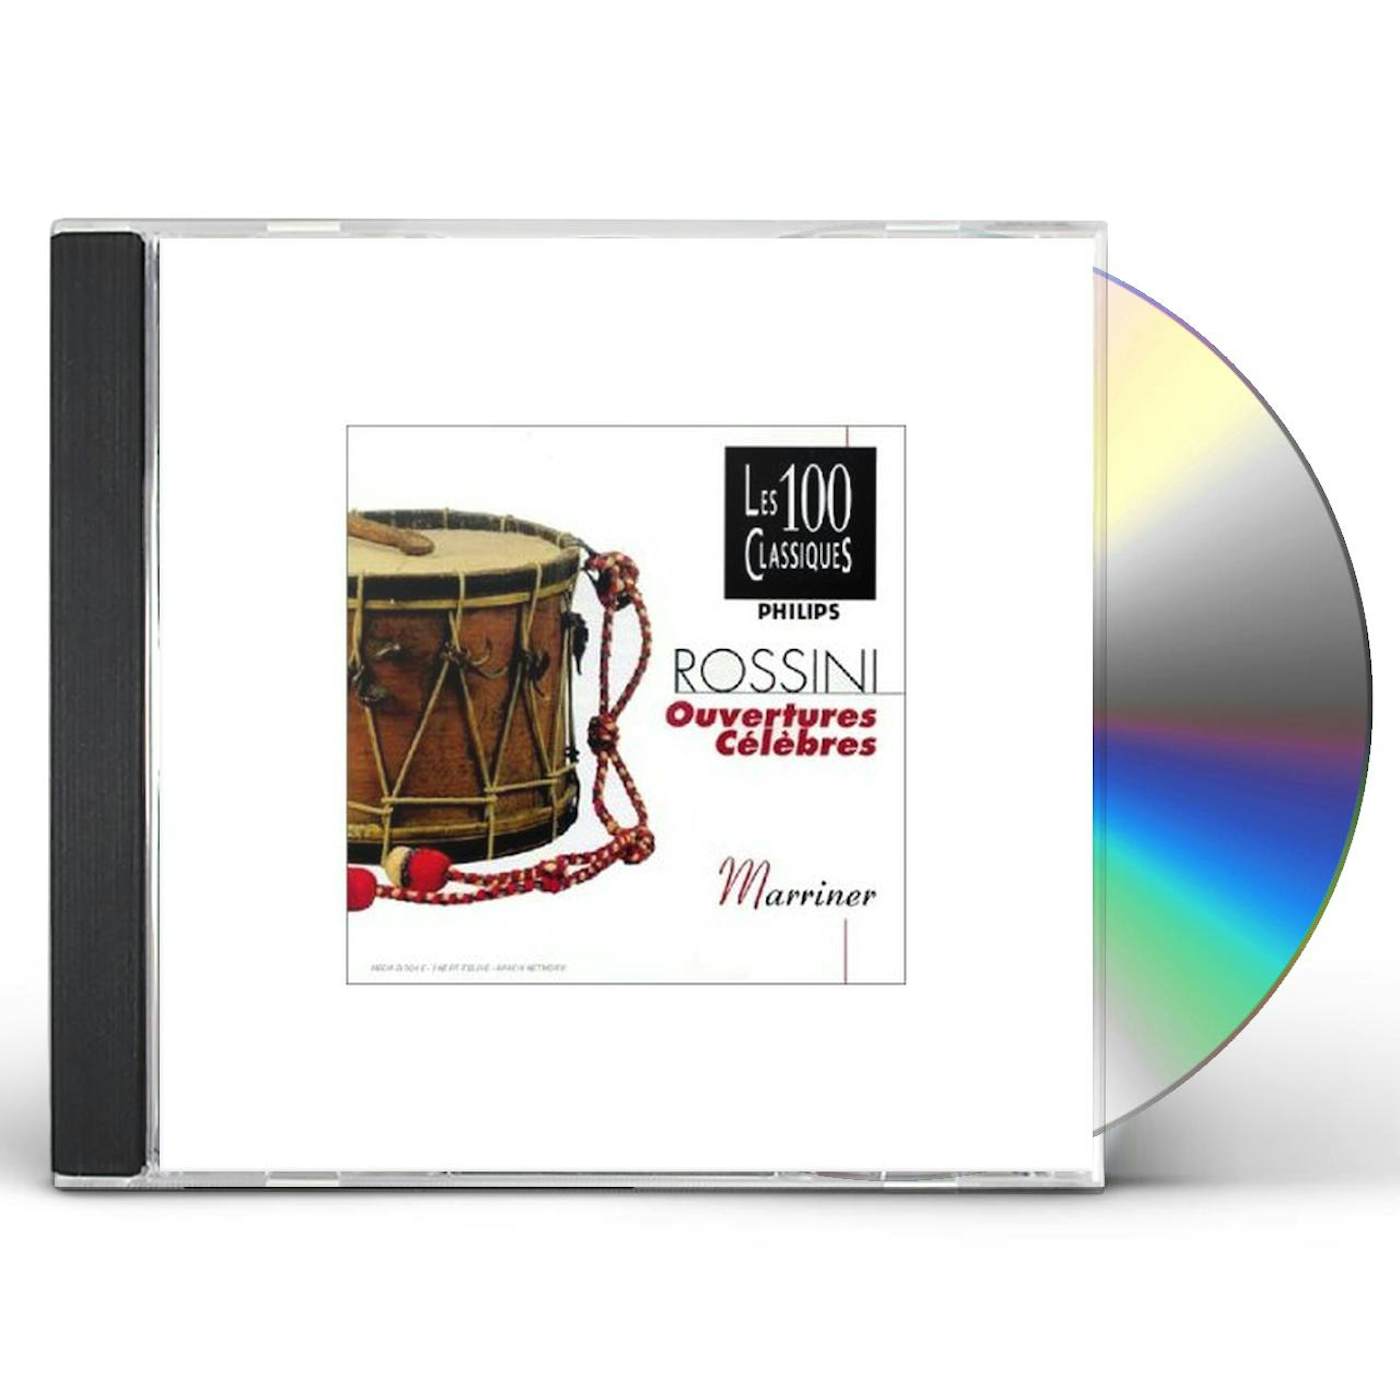 Neville Marriner ROSSINI-OUVERTURES CELEBRES CD